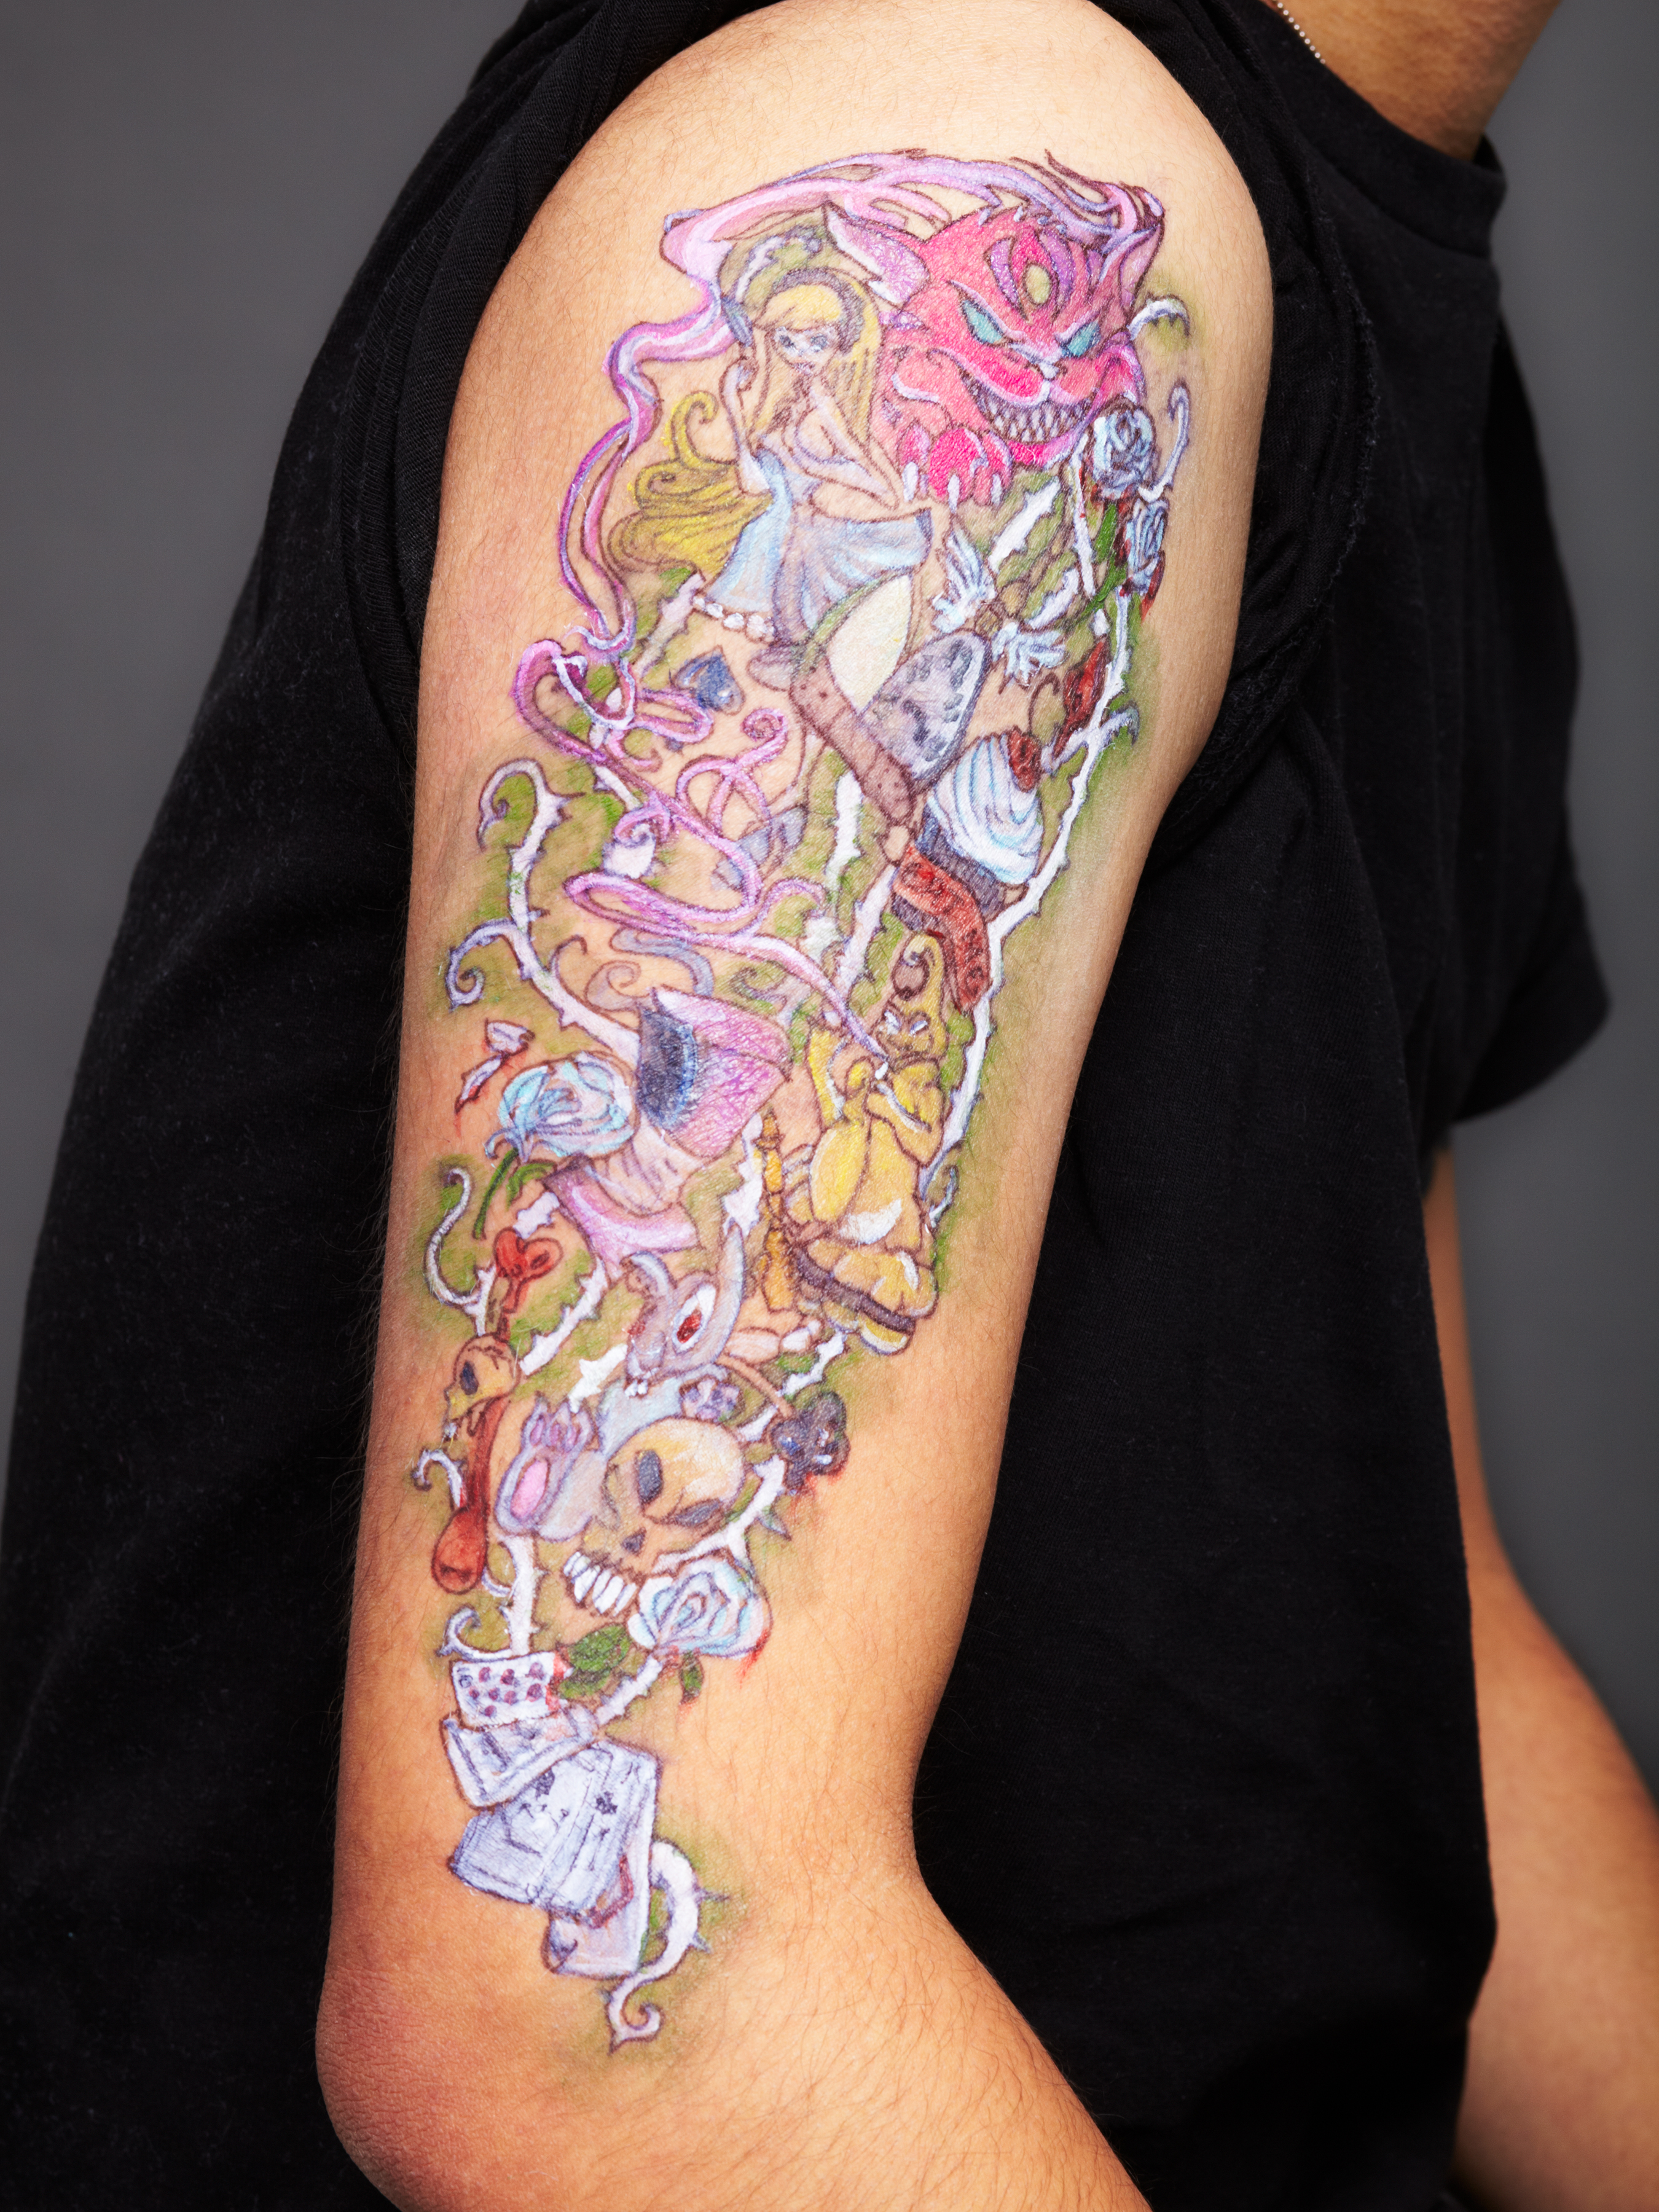 Alice in Wonderland Tattoo by radness-madness on DeviantArt